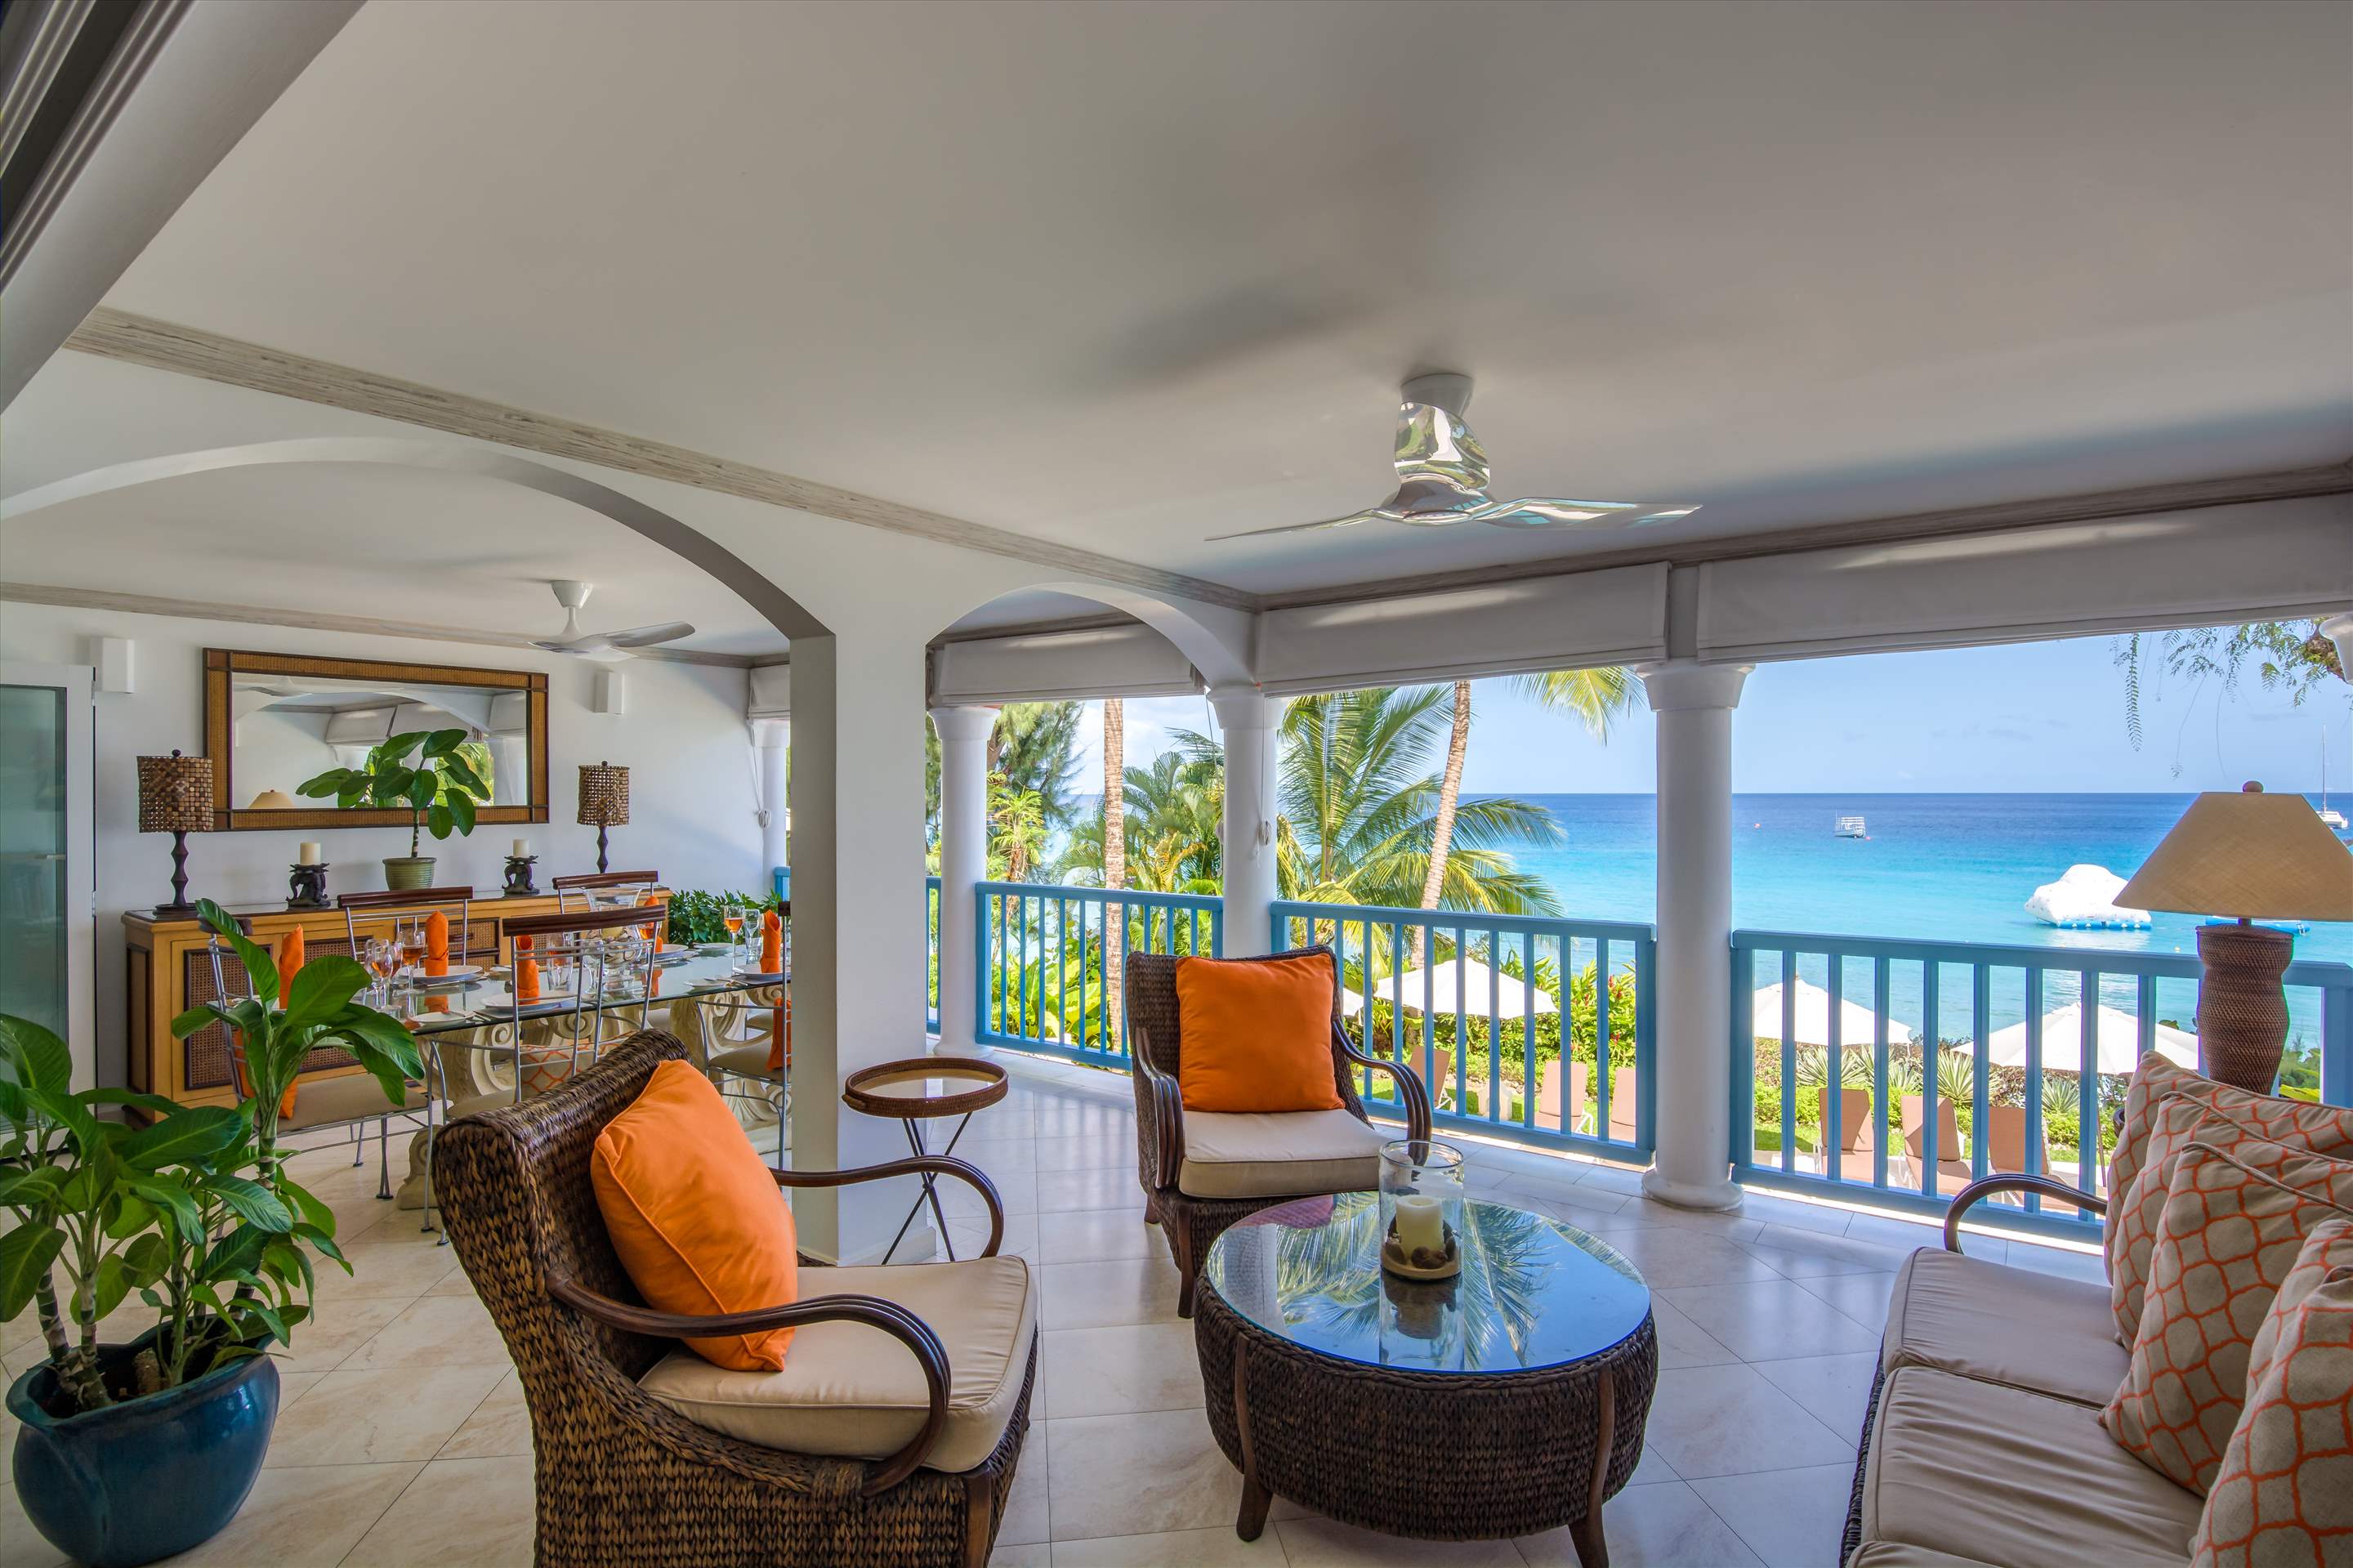 Villas on the Beach 201 , 2 bedroom, 2 bedroom apartment in St. James & West Coast, Barbados Photo #3